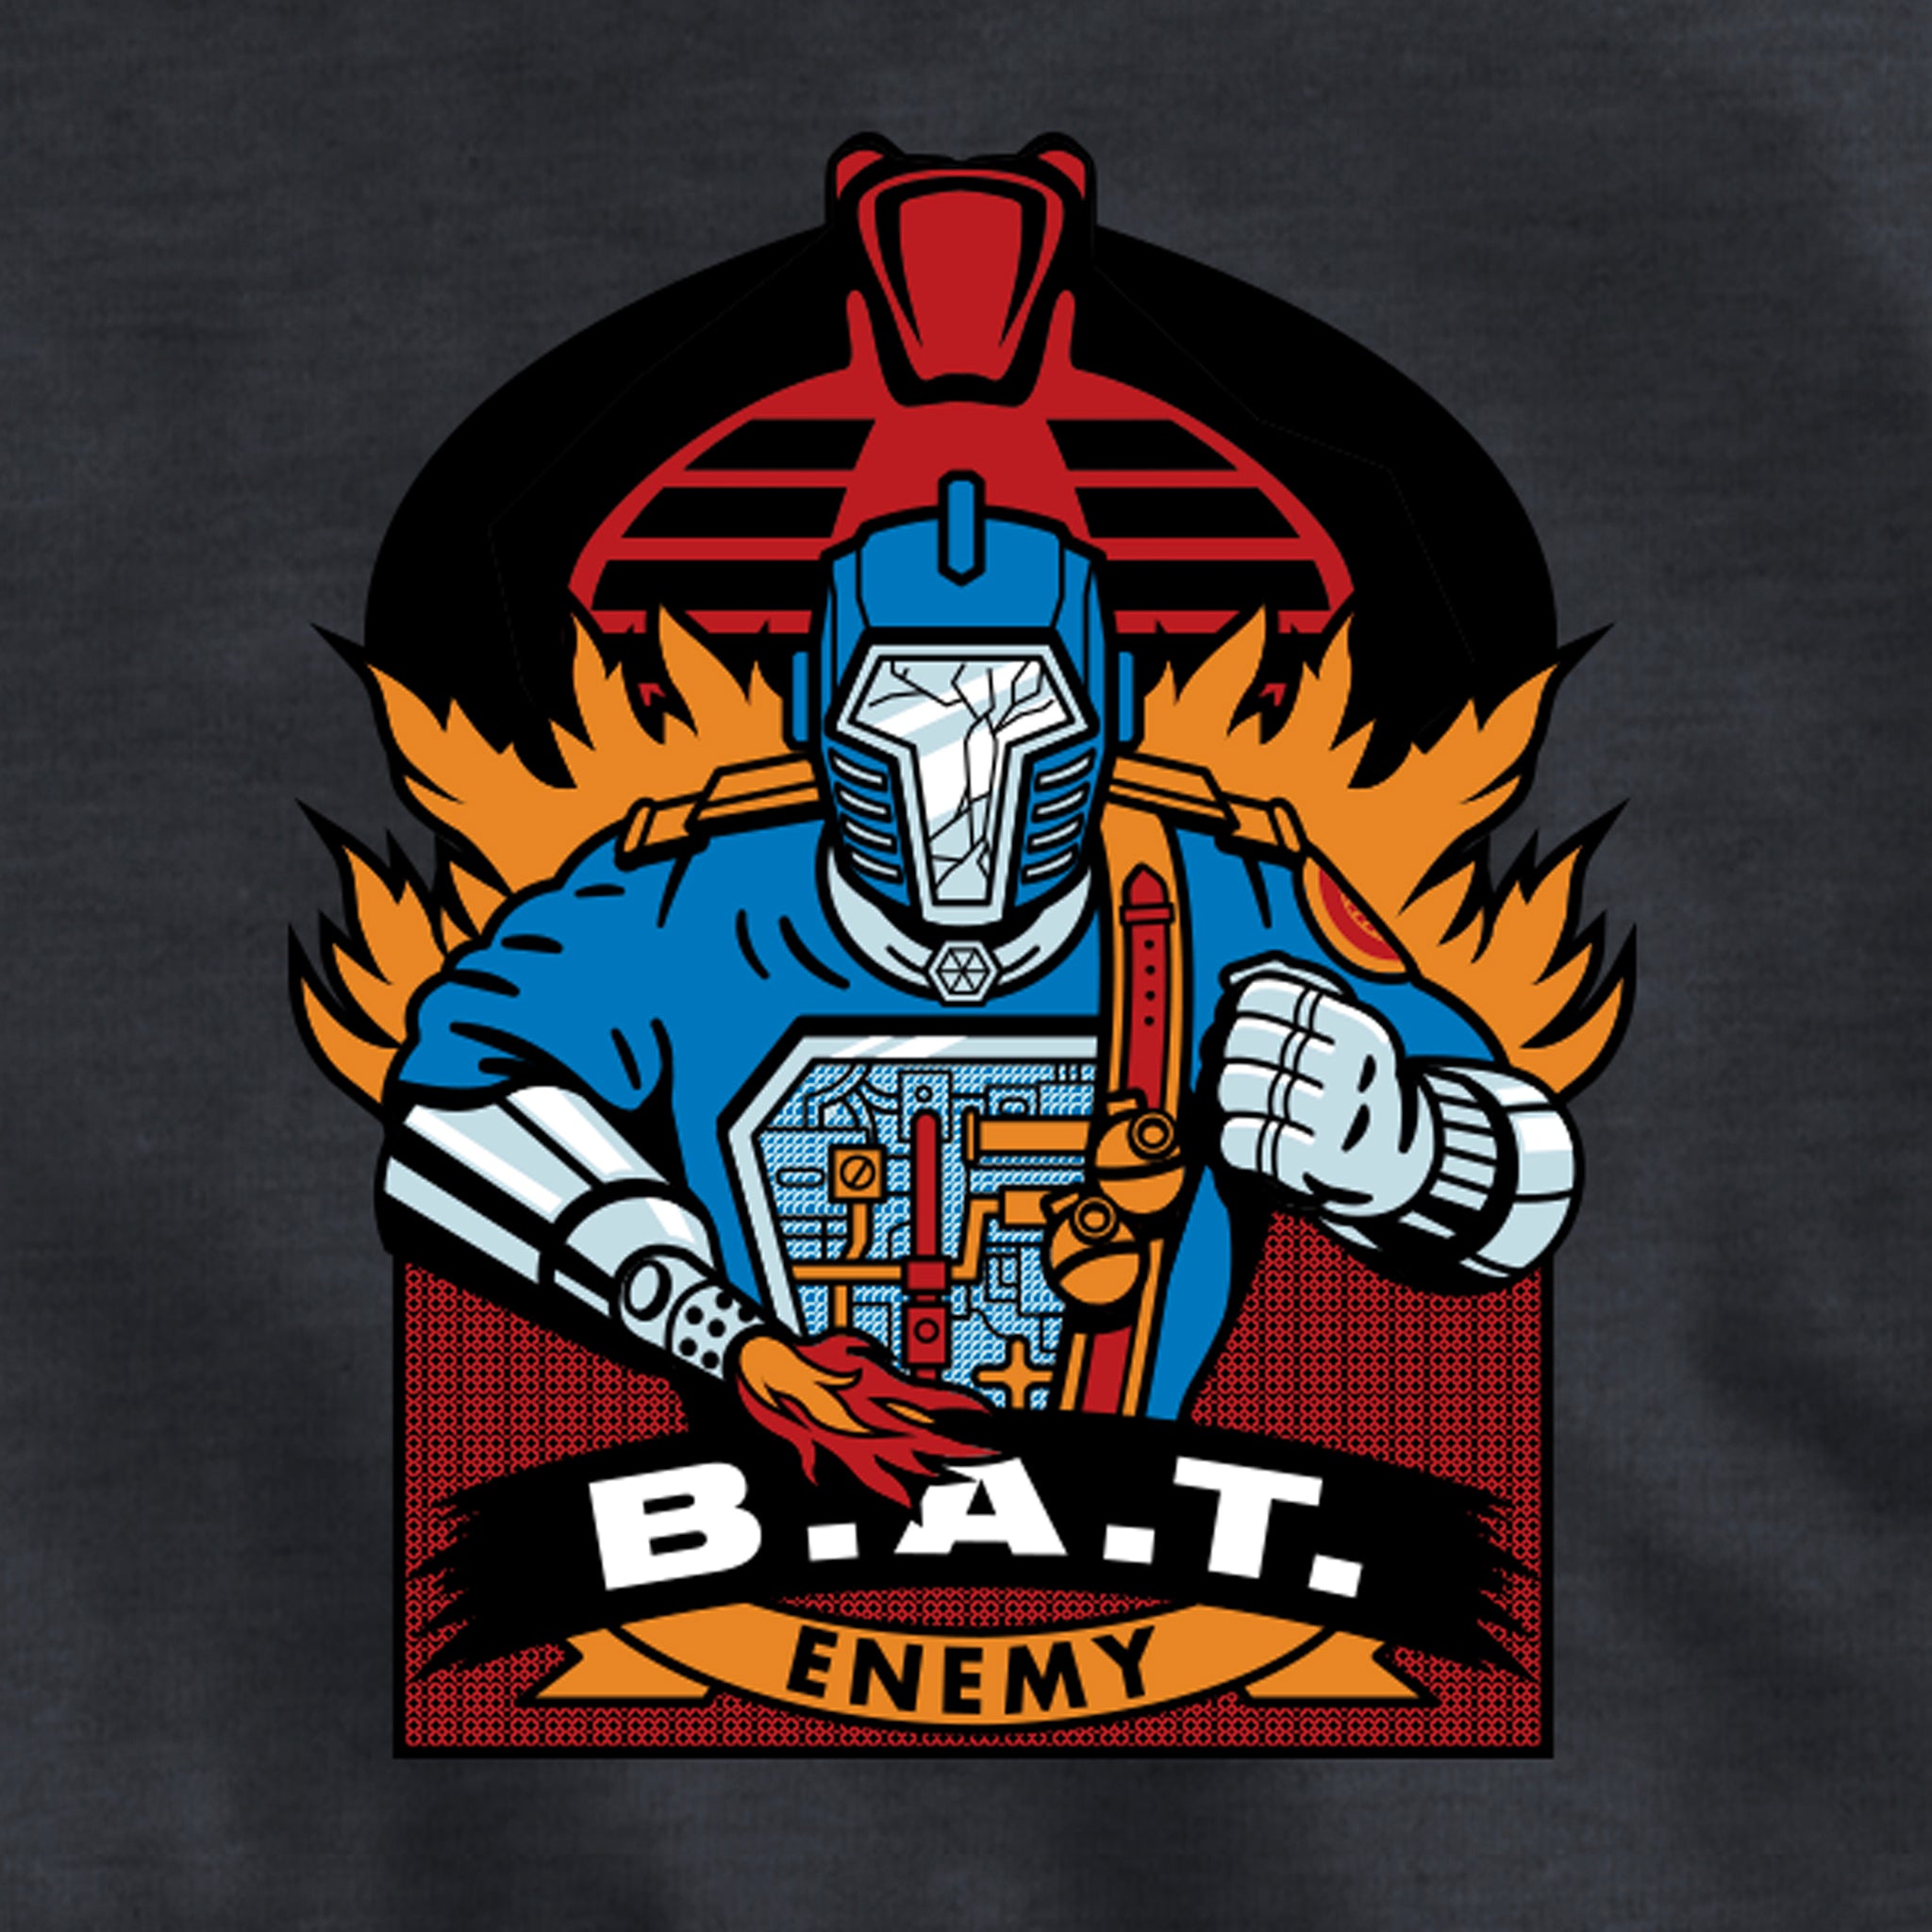 G.I. Joe - Cobra B.A.T. T-shirt